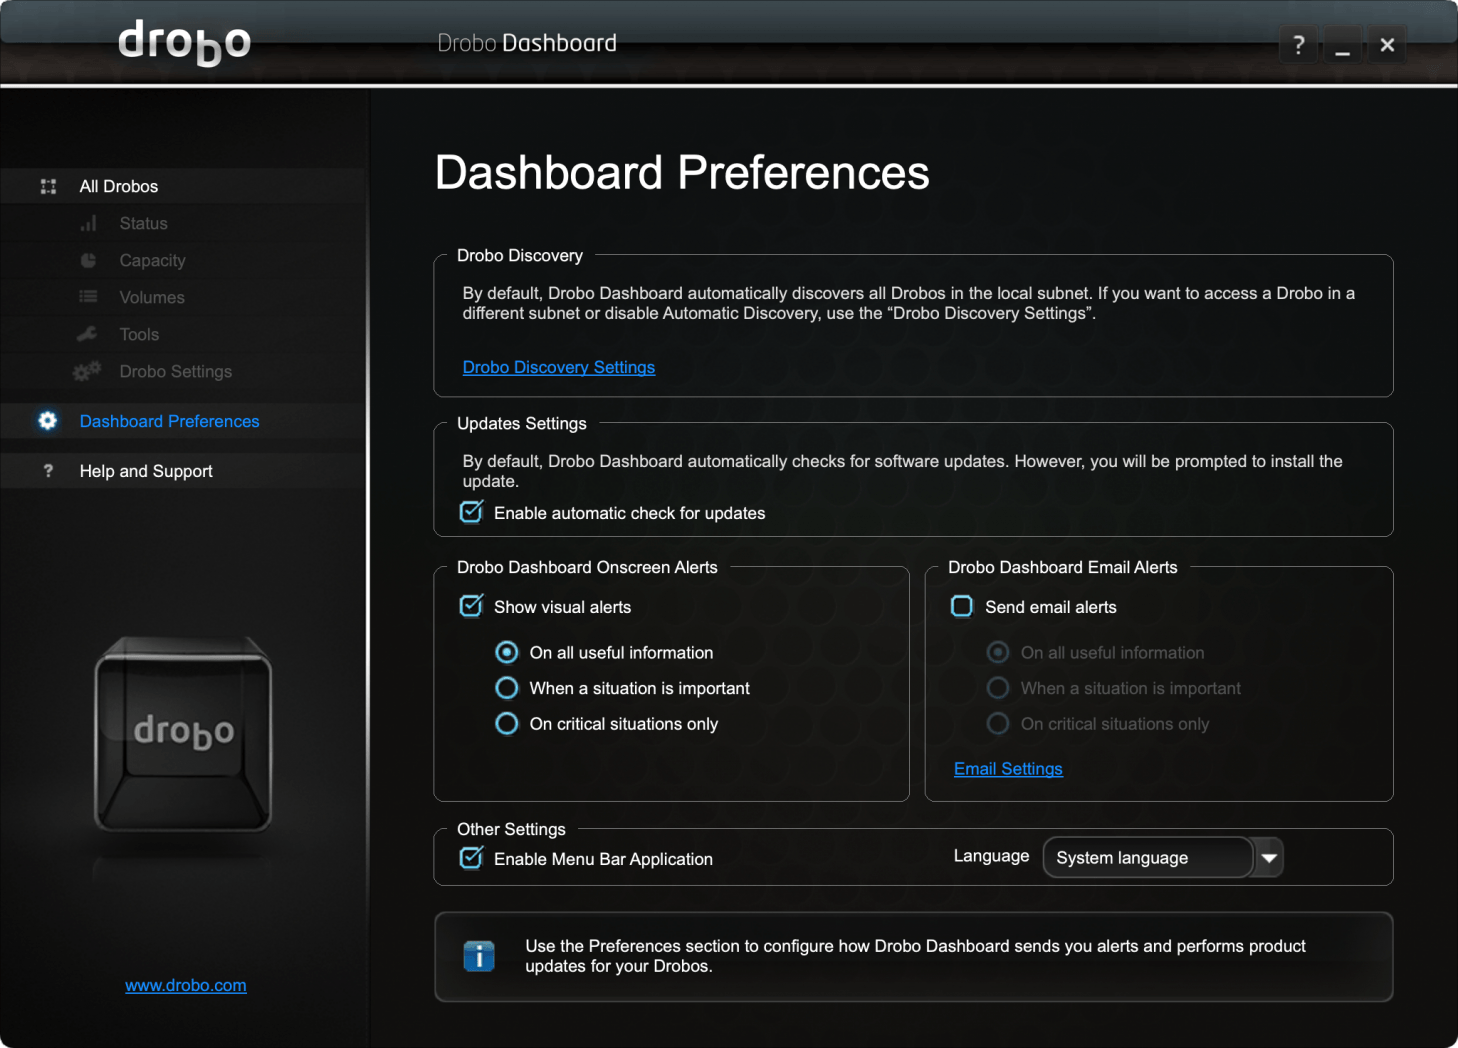 drobo dashboard 3.1.5